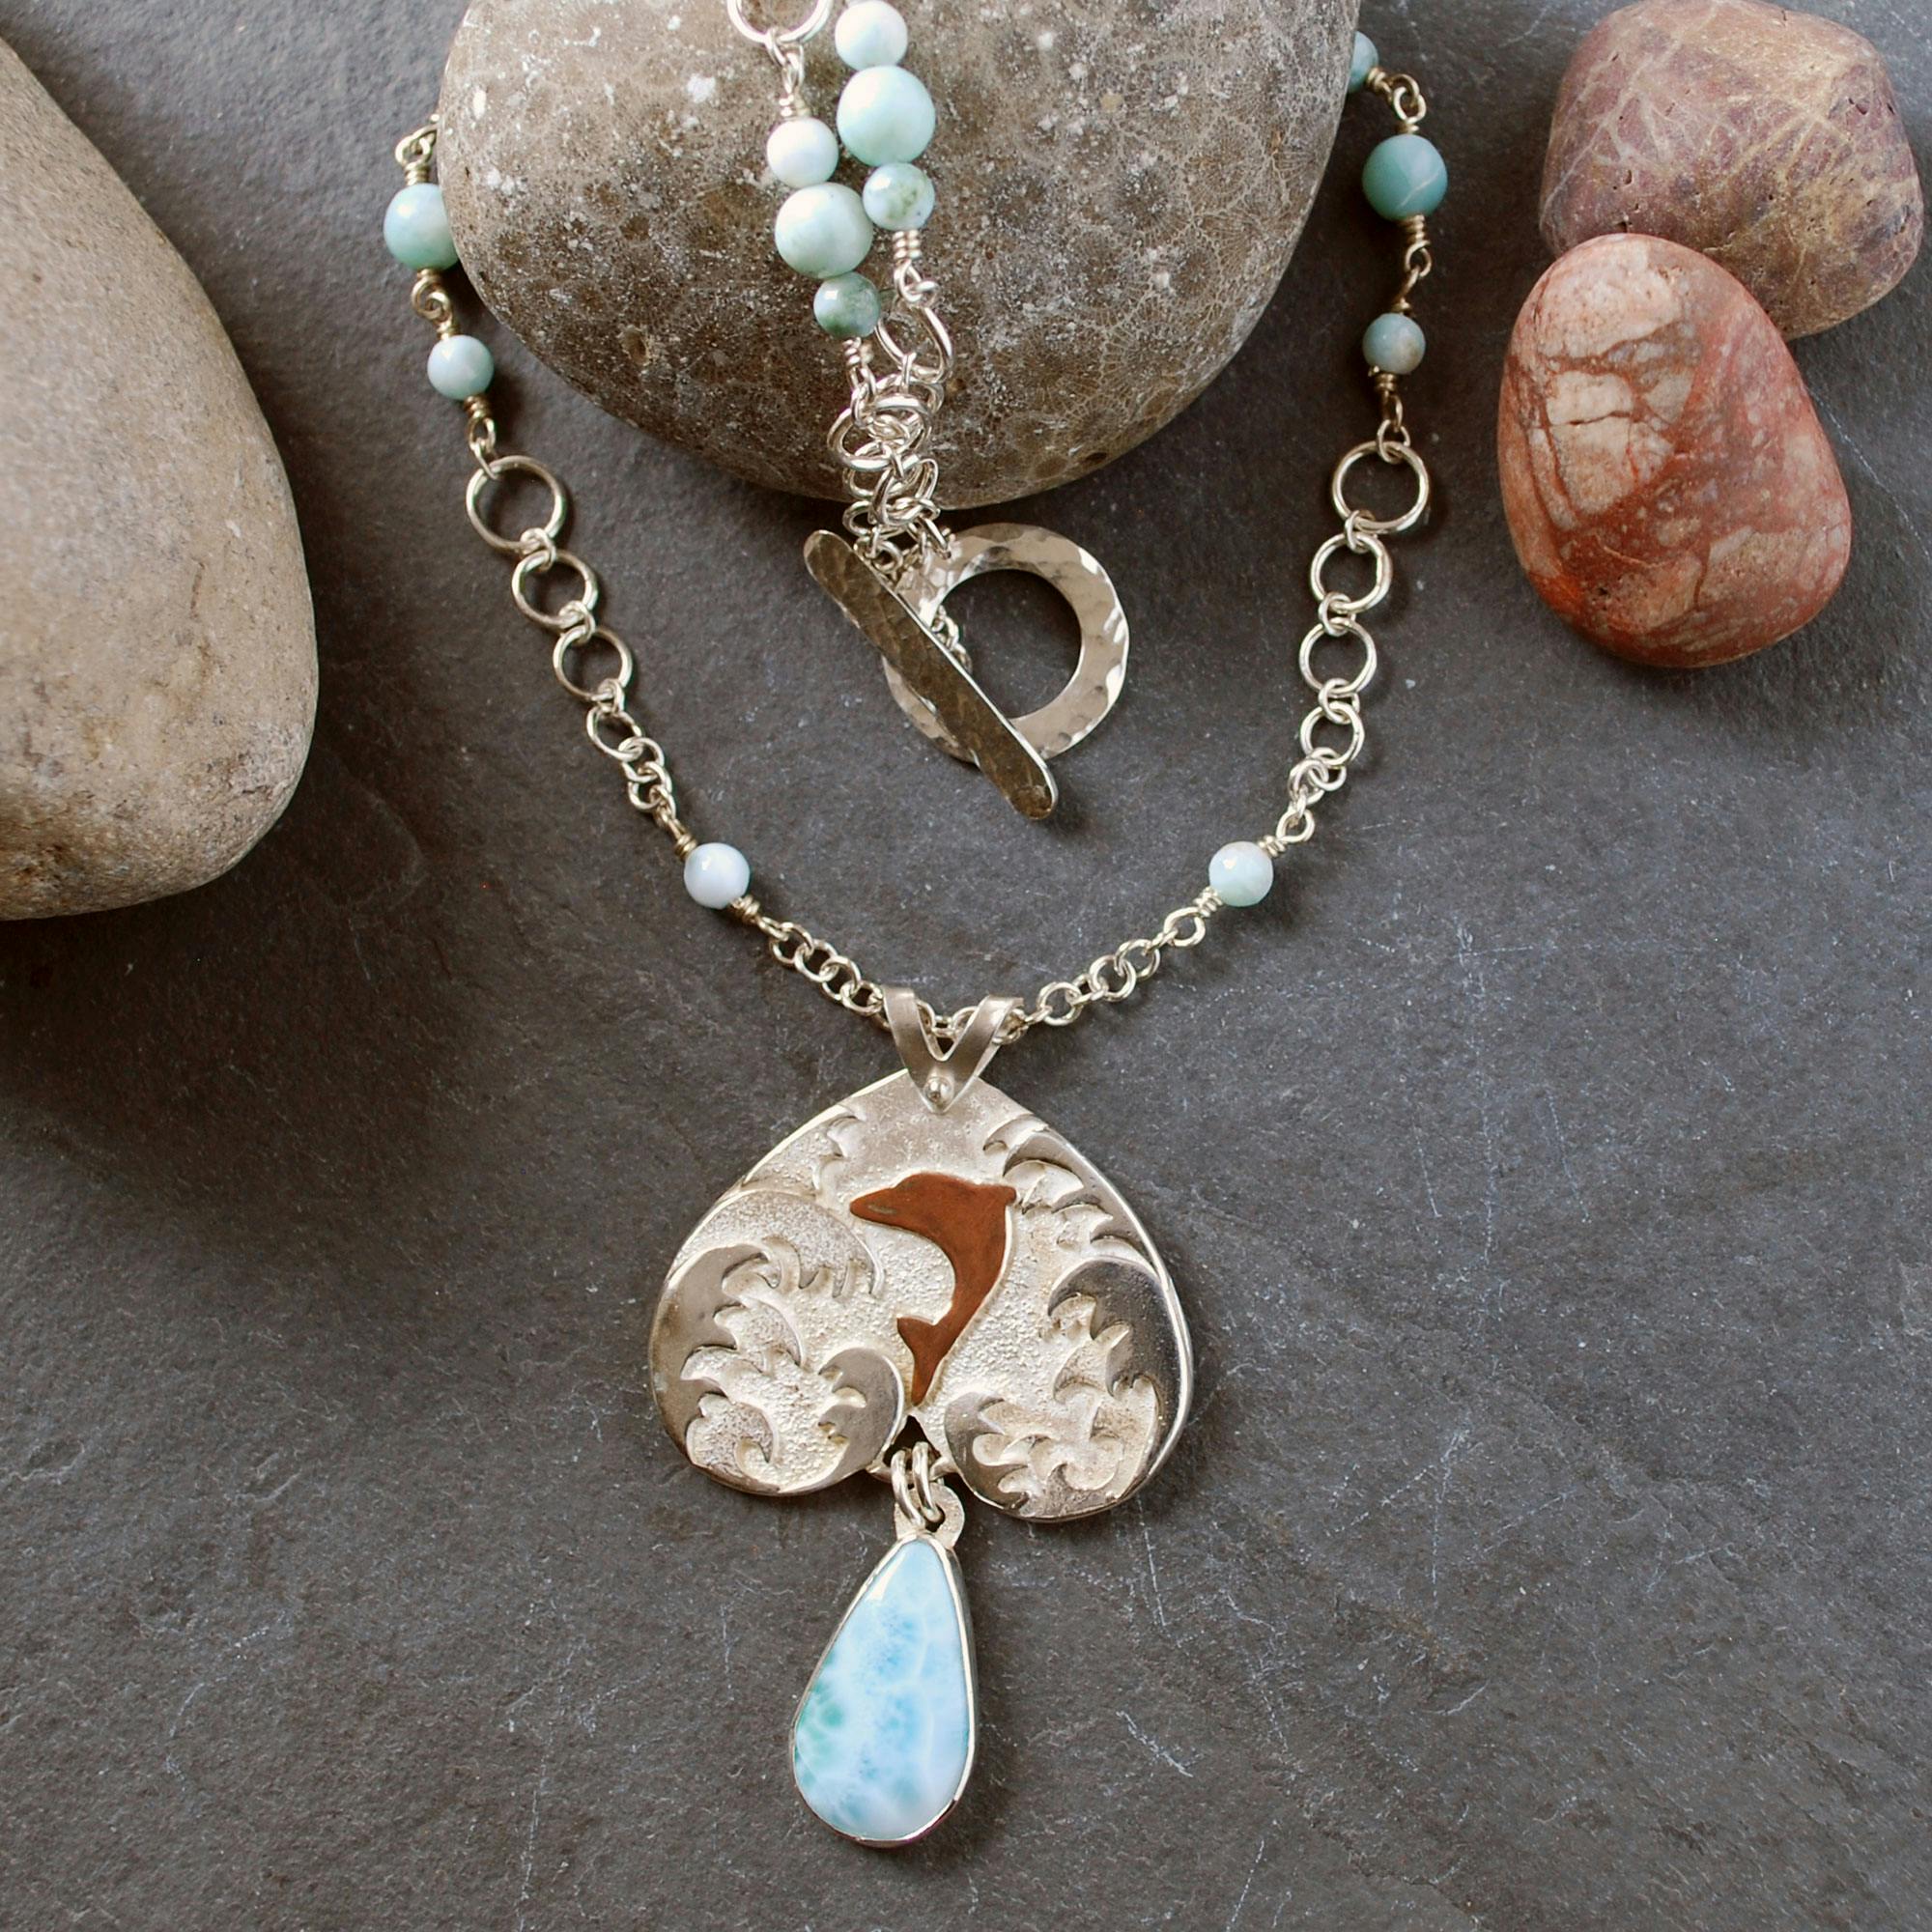 Larimar pendant with dolphin